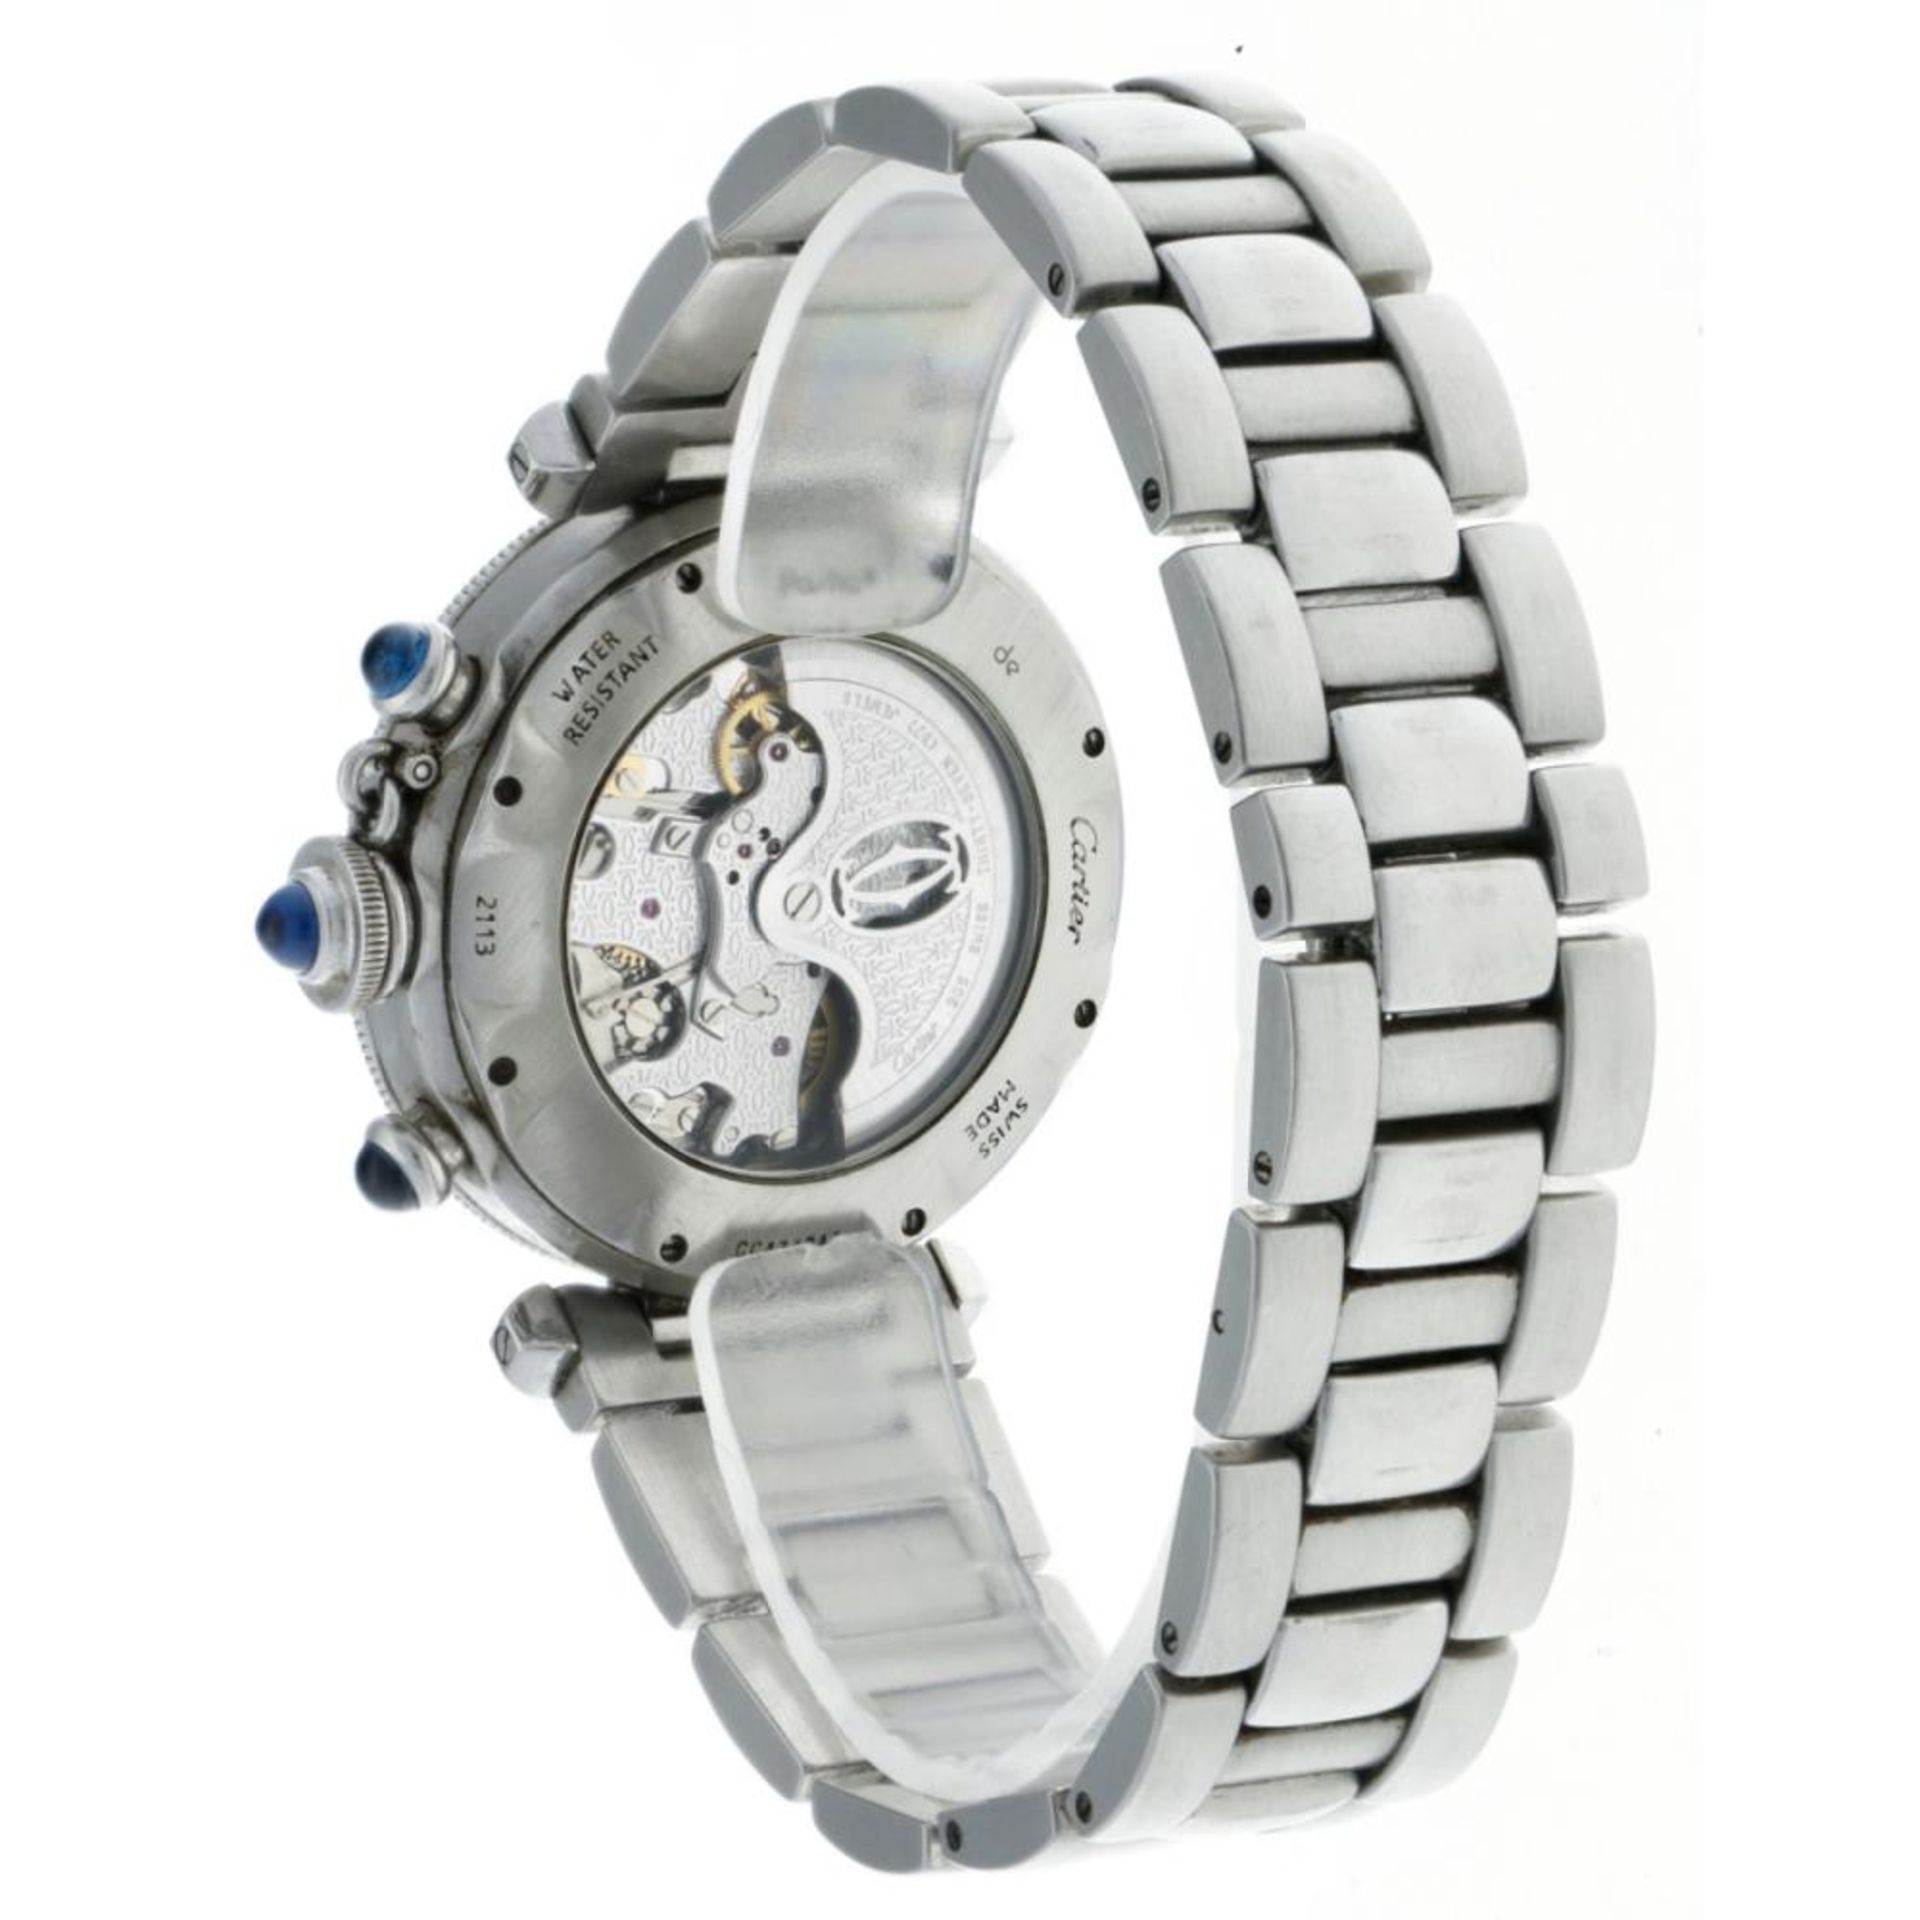 Cartier Pasha 2113 - Men's watch - approx. 2010. - Image 6 of 12